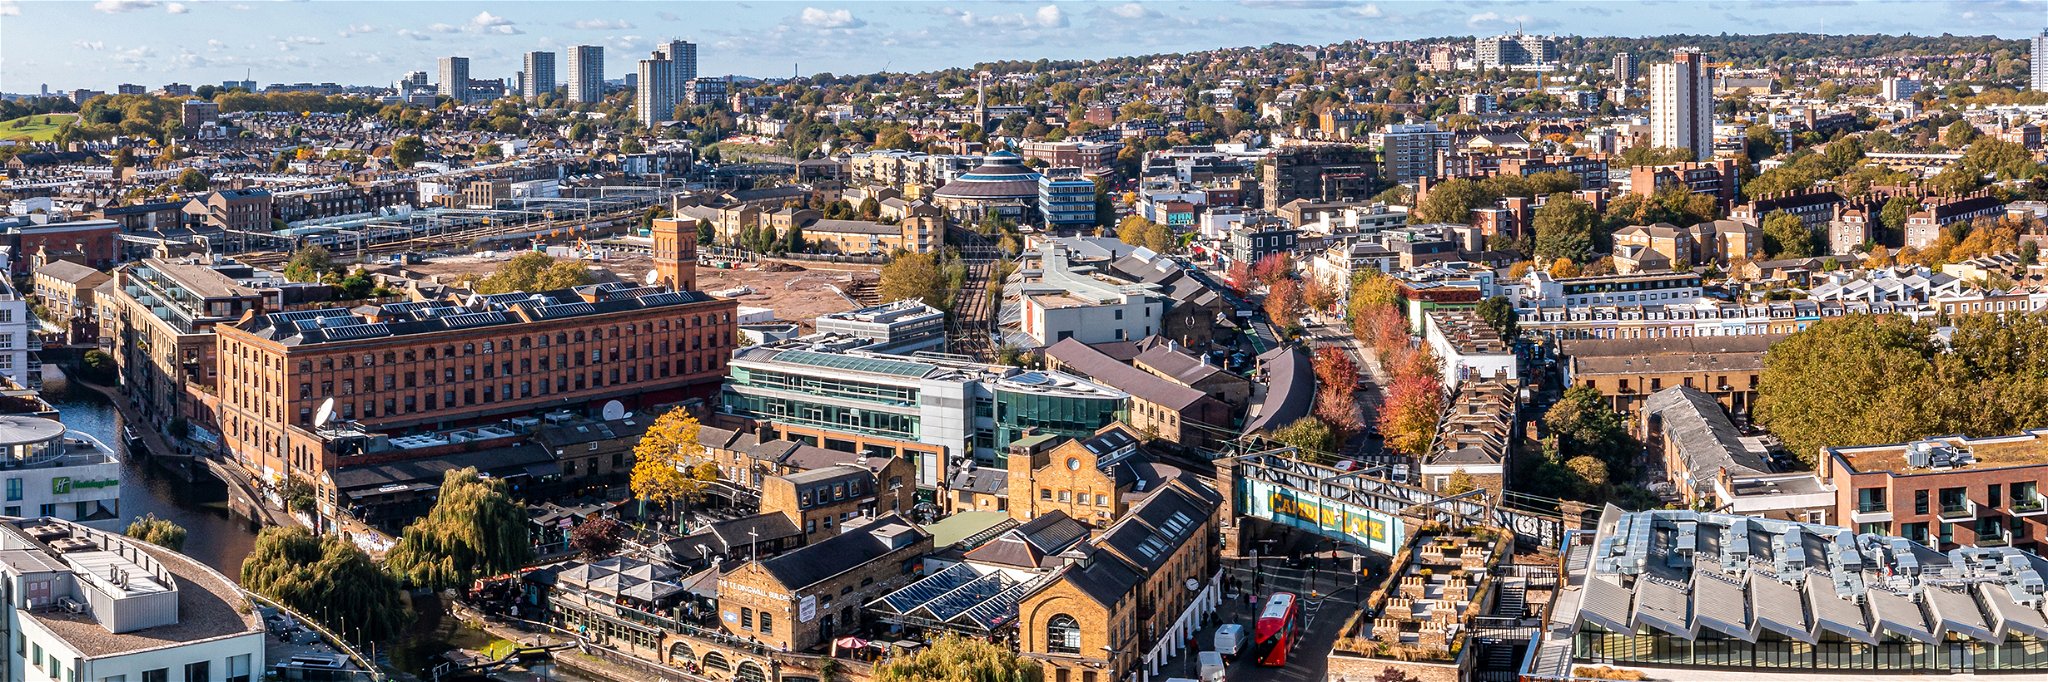 Aerial view of Camden Lock Market, London.